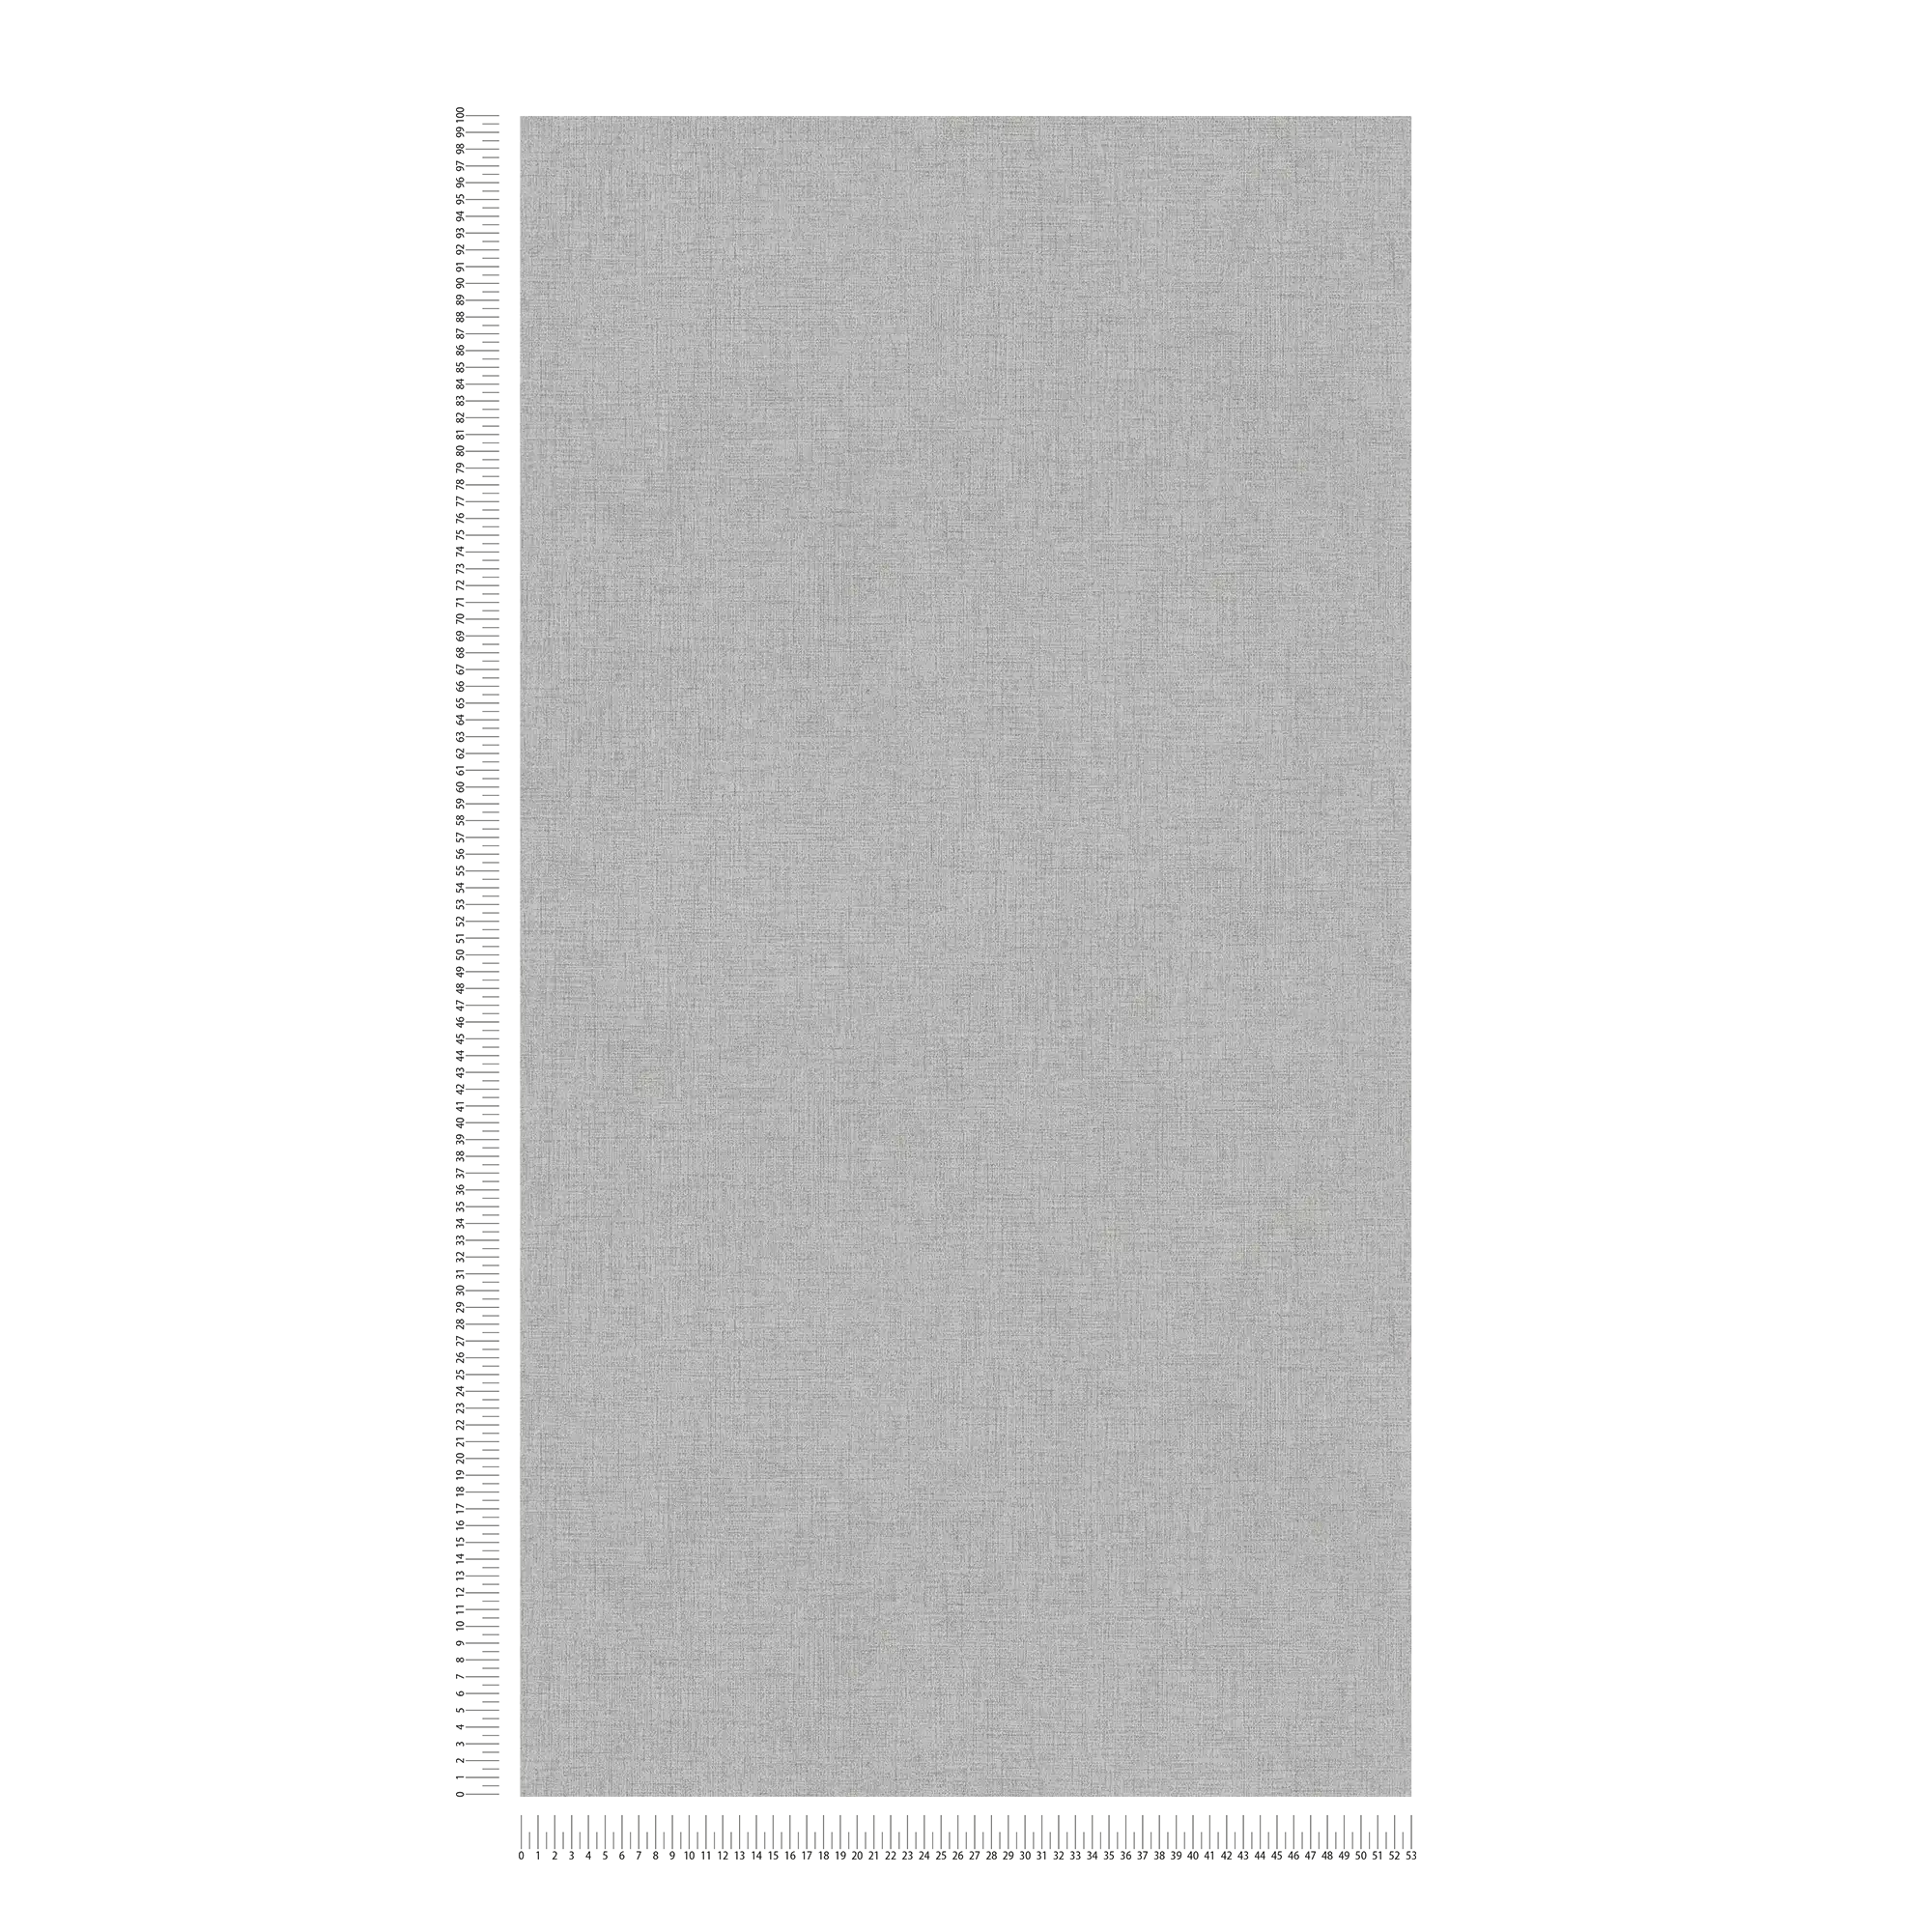             Papel pintado unitario con sutil aspecto de lino - gris
        